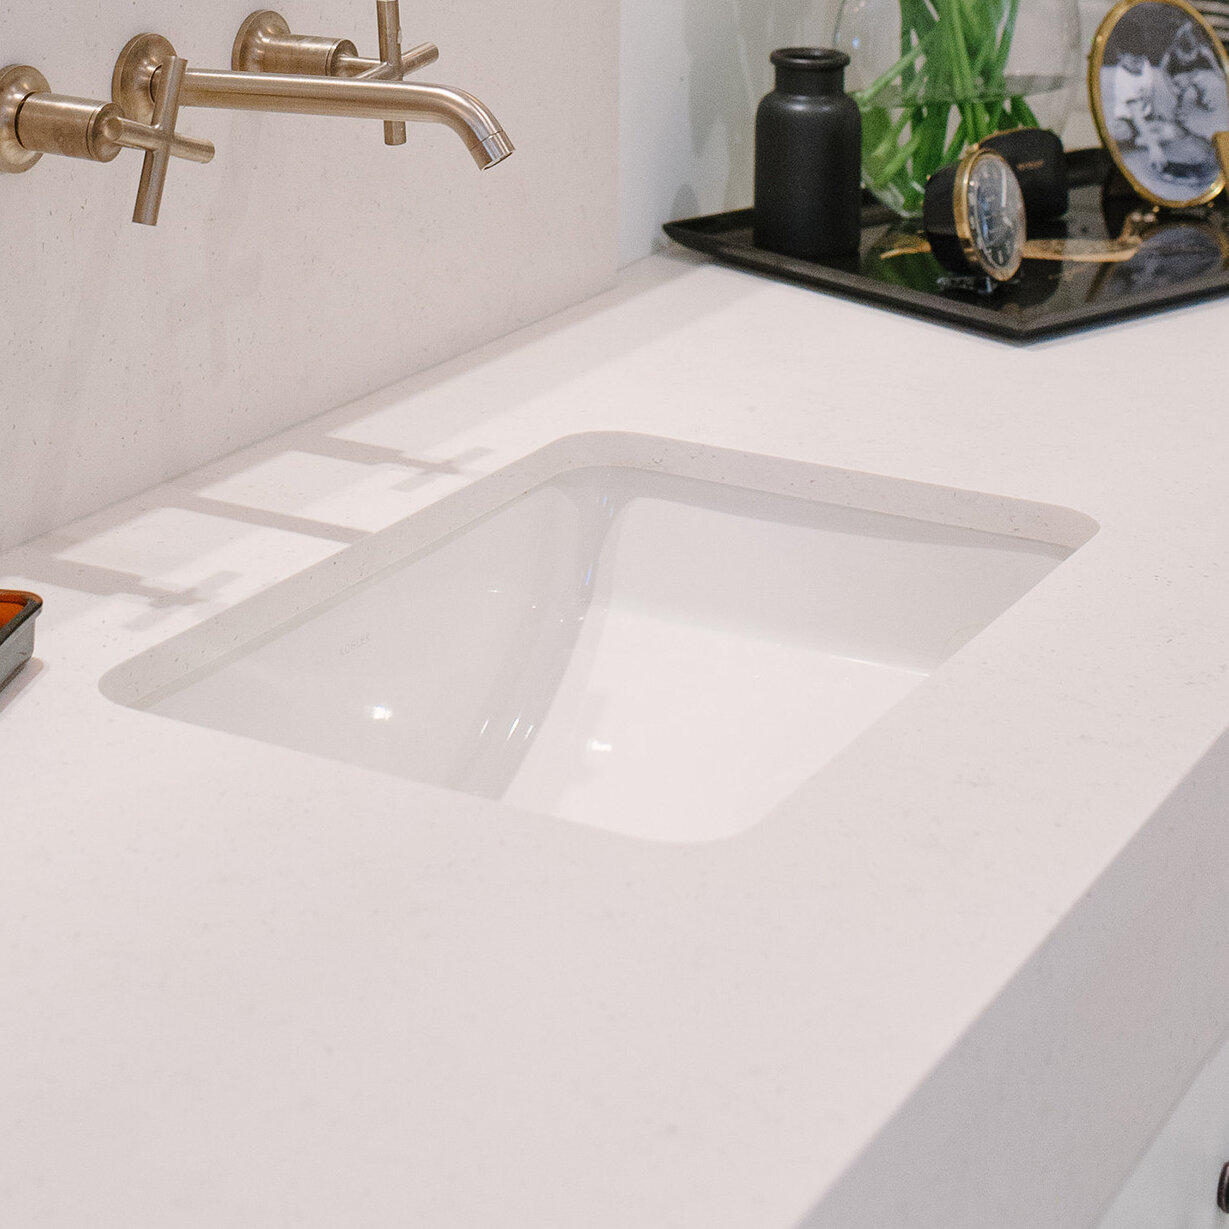 Kohler Ladena Finish Ceramic Rectangular Undermount Bathroom Sink With Overflow Reviews Wayfairca